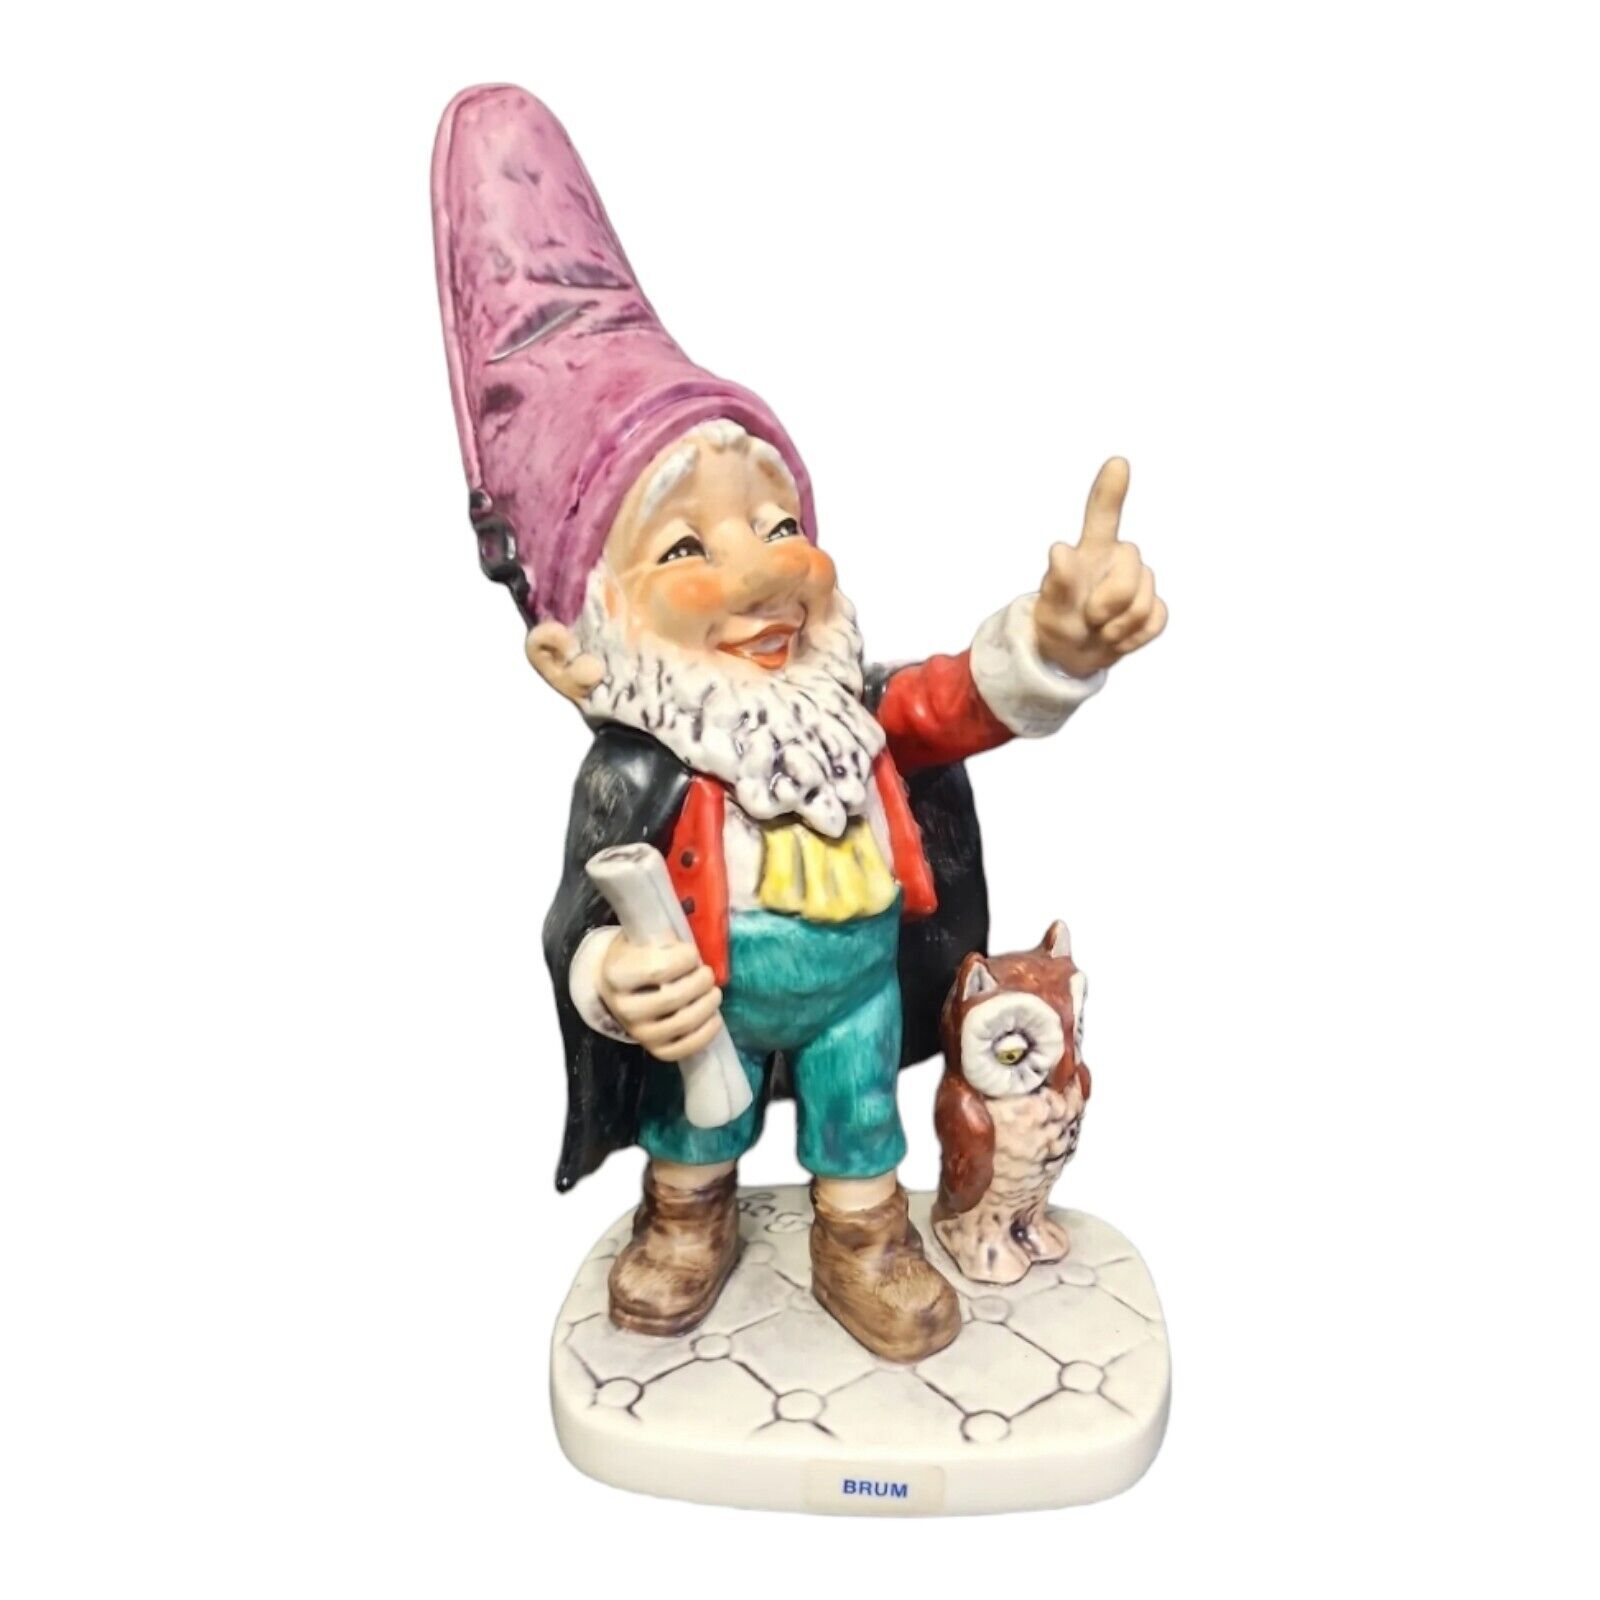 Goebel Gnome Figurine Hummel Co Boy Dwarf Germany 512 Brum Lawyer Owl Well VTG